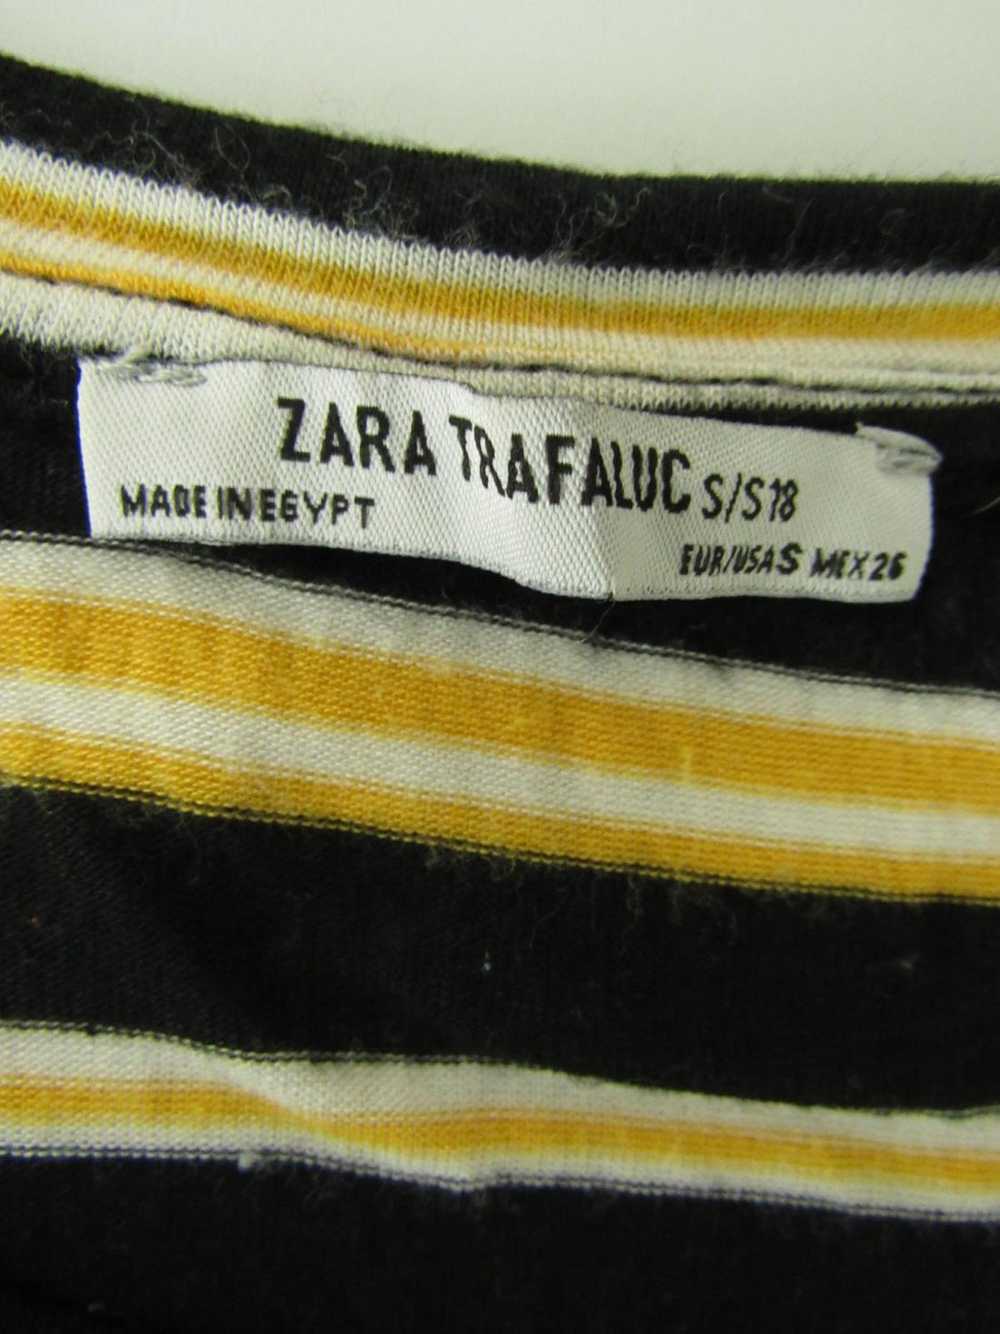 Zara Trafaluc T-Shirt Top - image 3